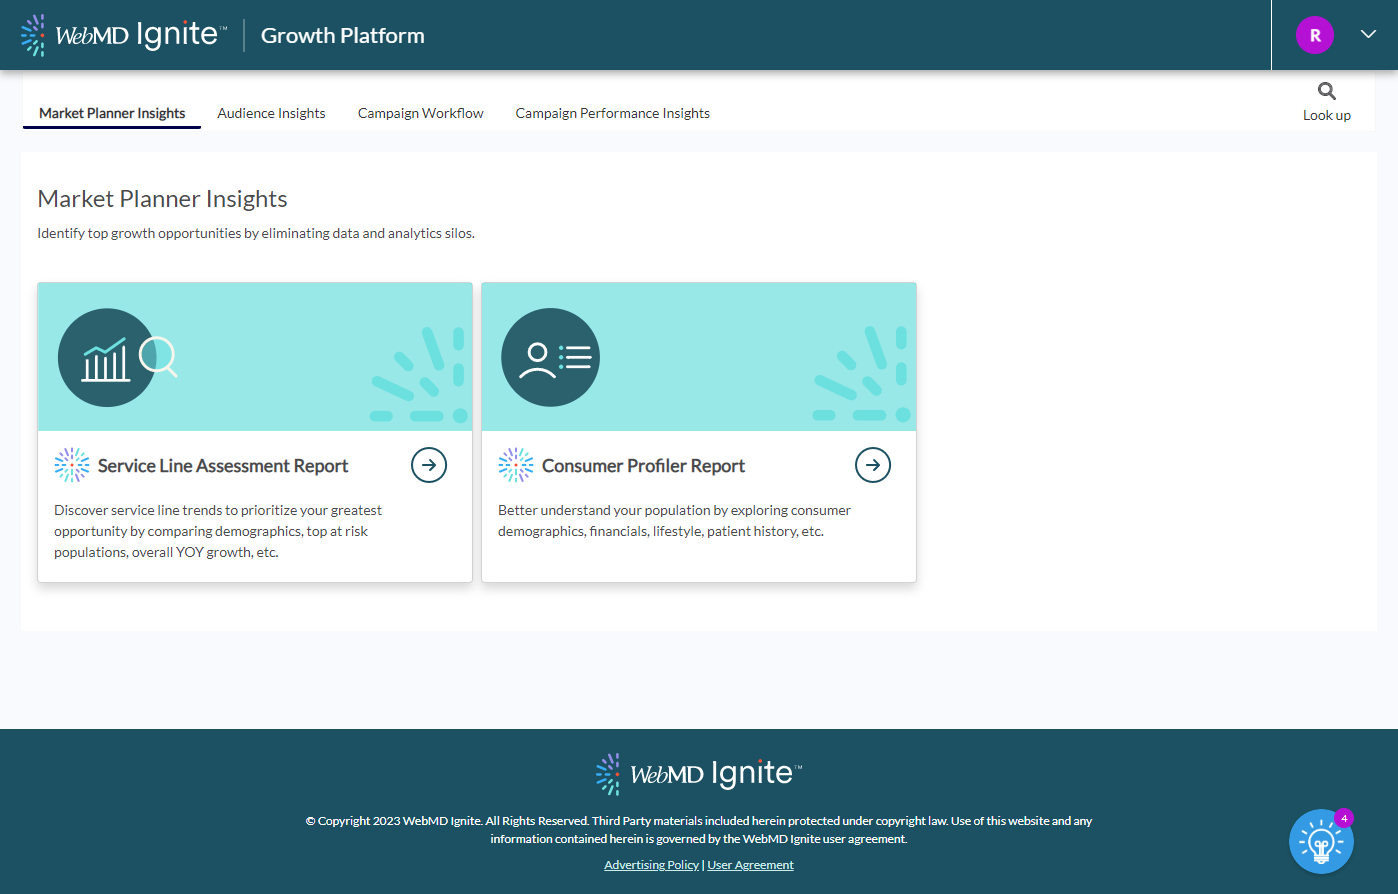 Ignite Growth Platform, Market Planner Insights page